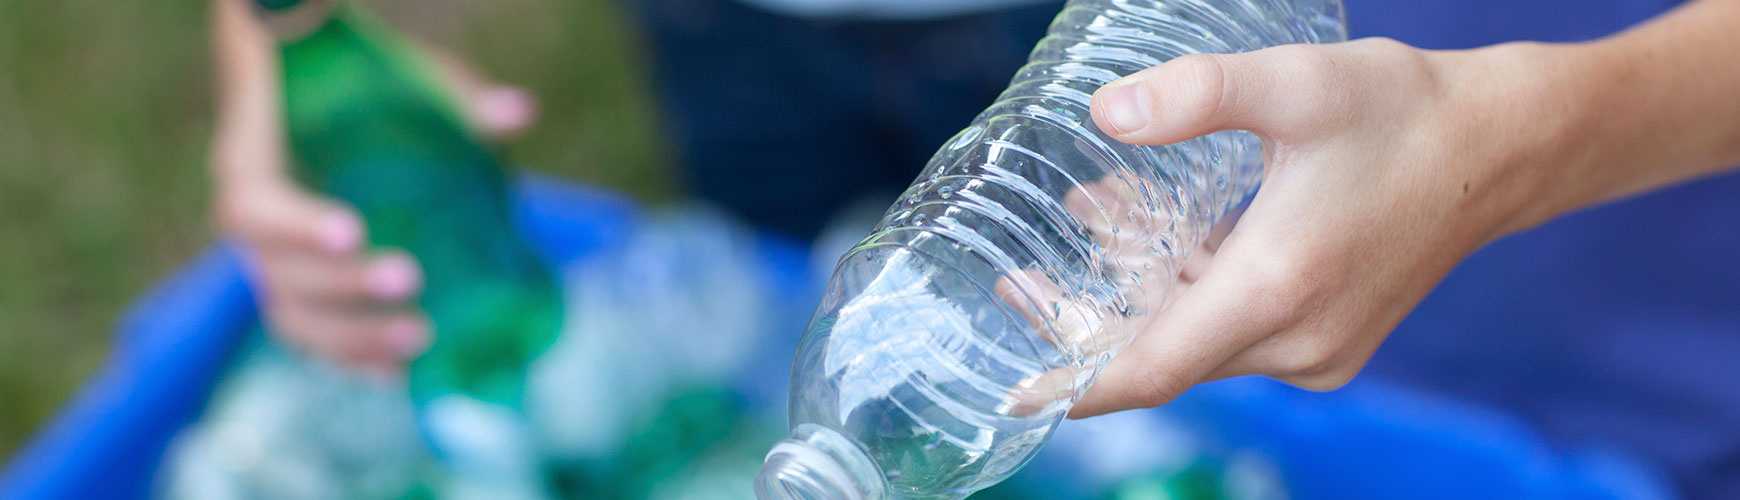 putting plastic bottle in recycle bin